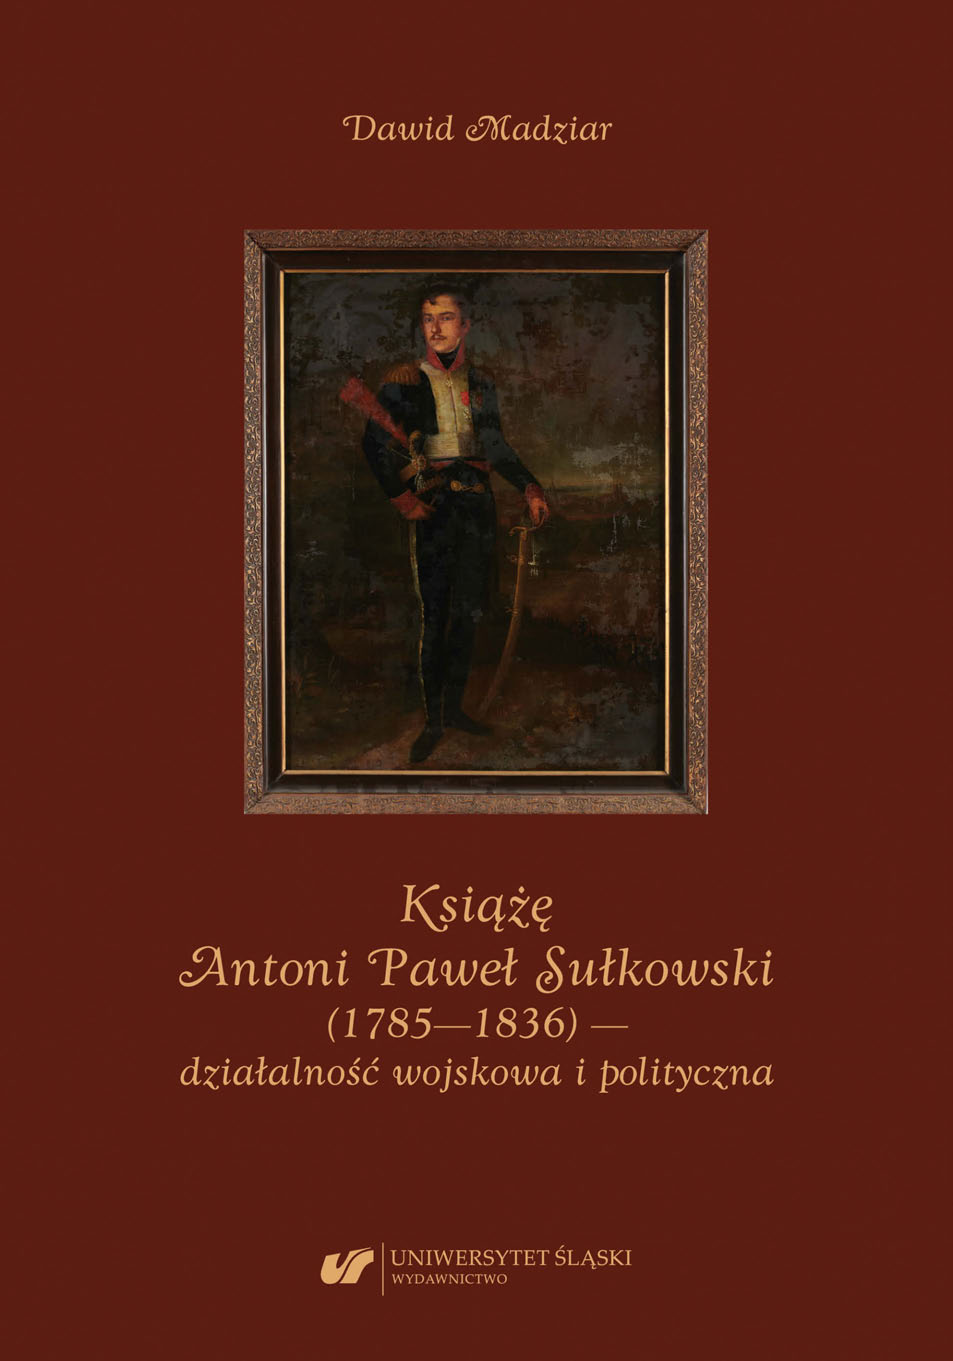 Duke Antoni Paweł Sułkowski (1785—1836) — military and political activity